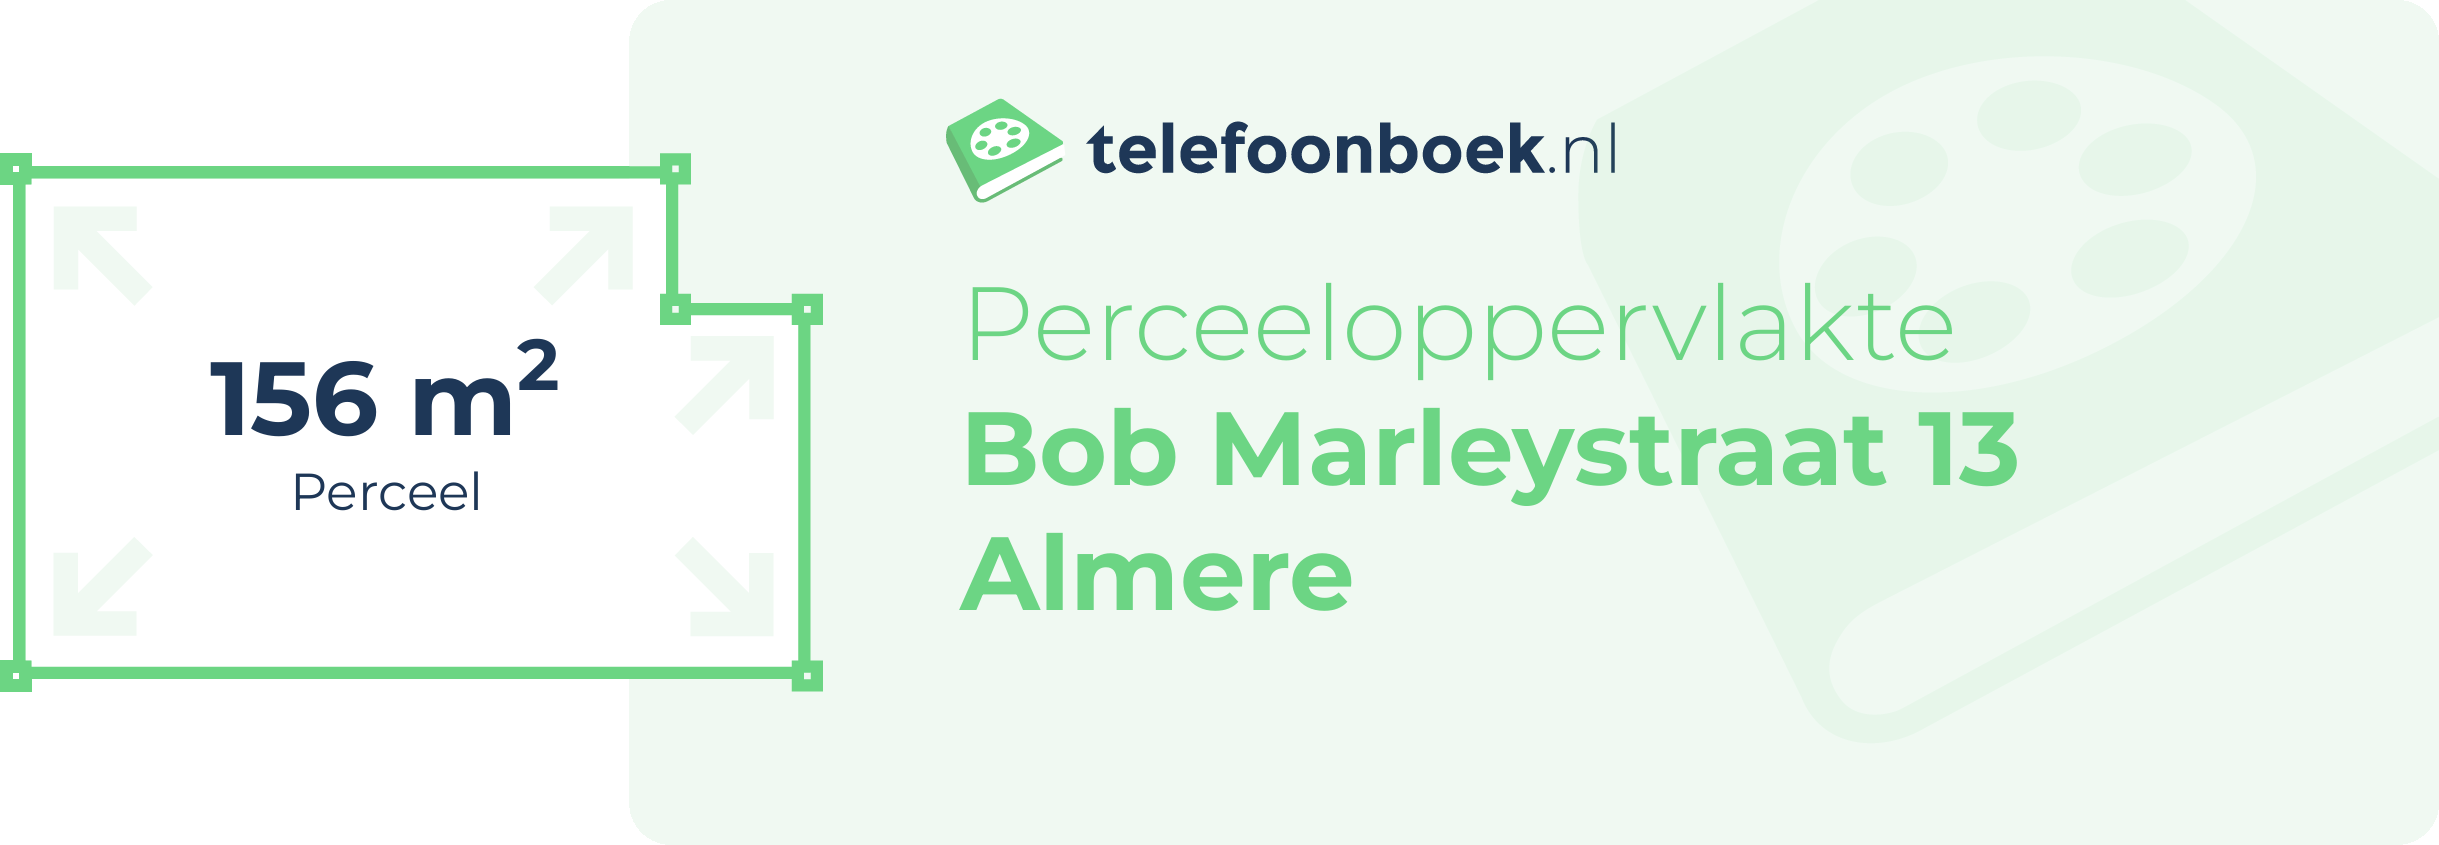 Perceeloppervlakte Bob Marleystraat 13 Almere